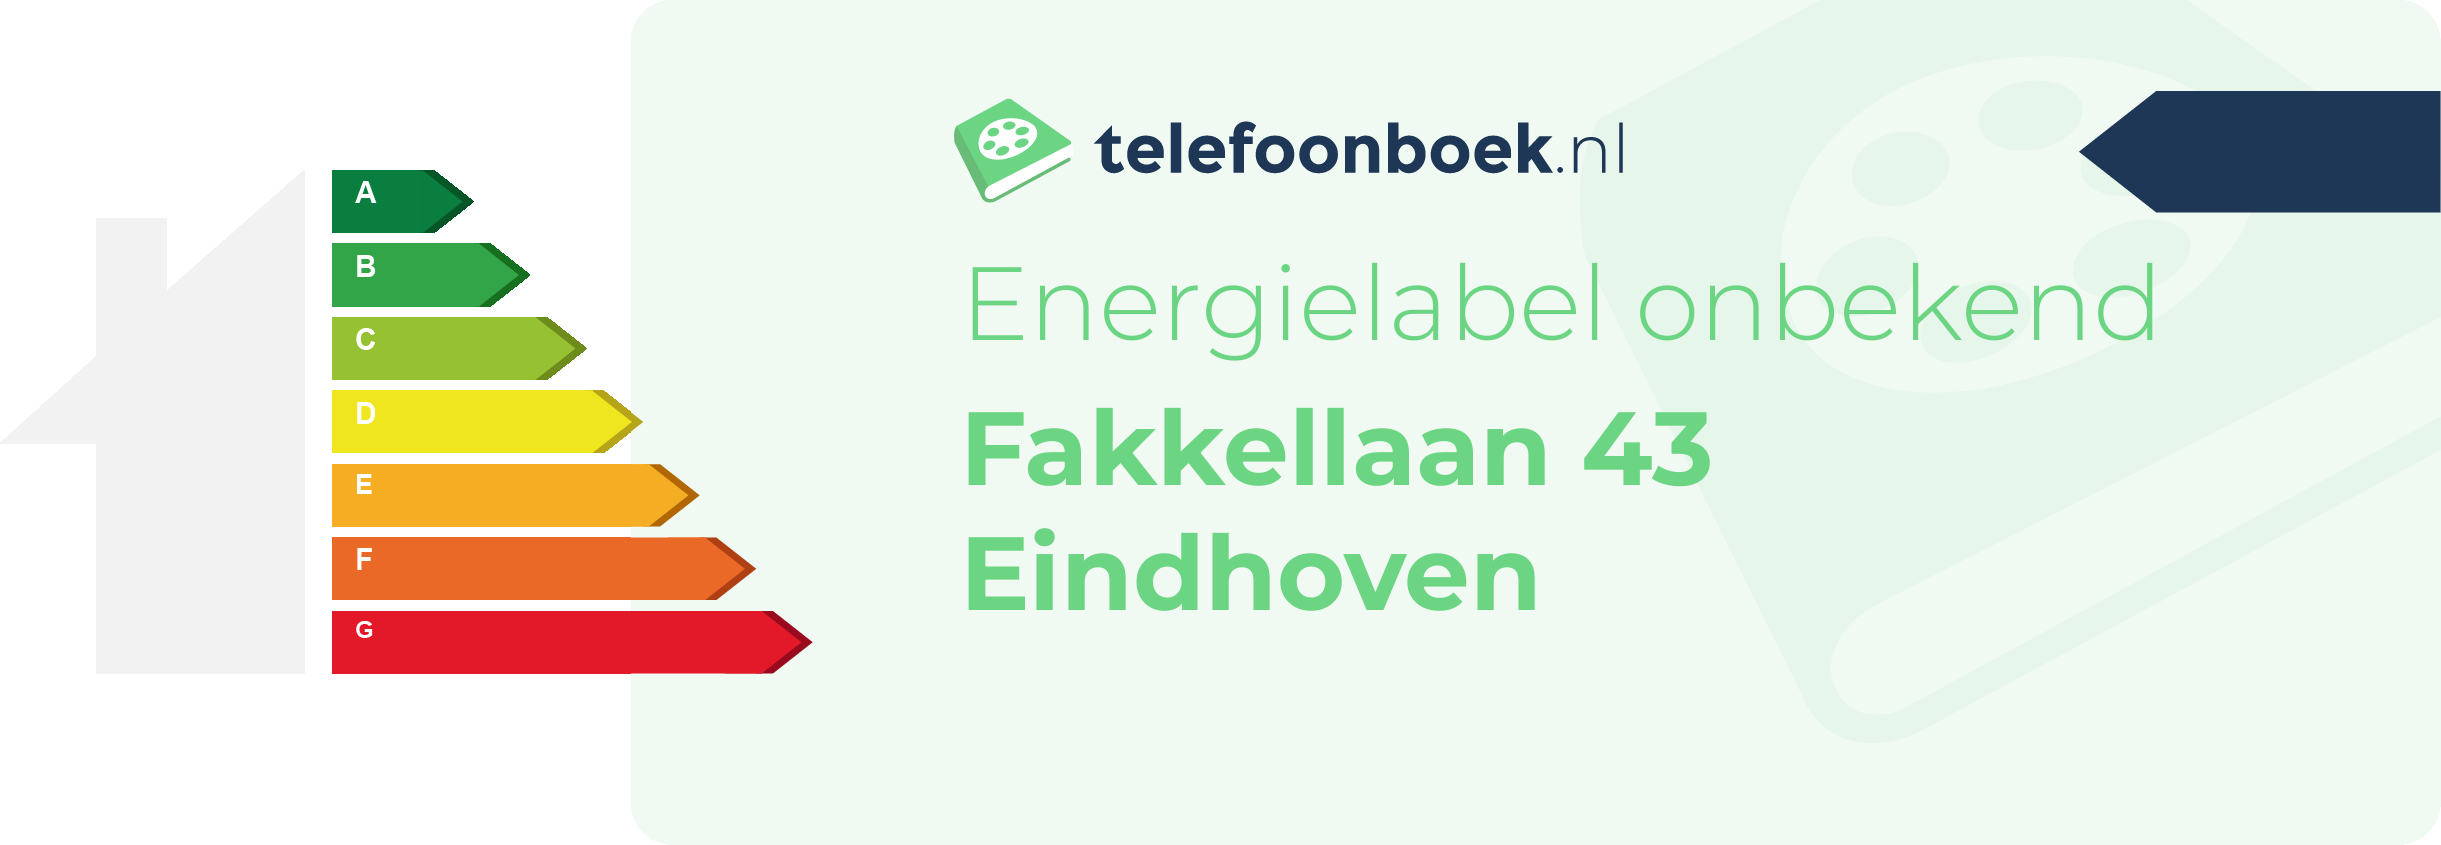 Energielabel Fakkellaan 43 Eindhoven